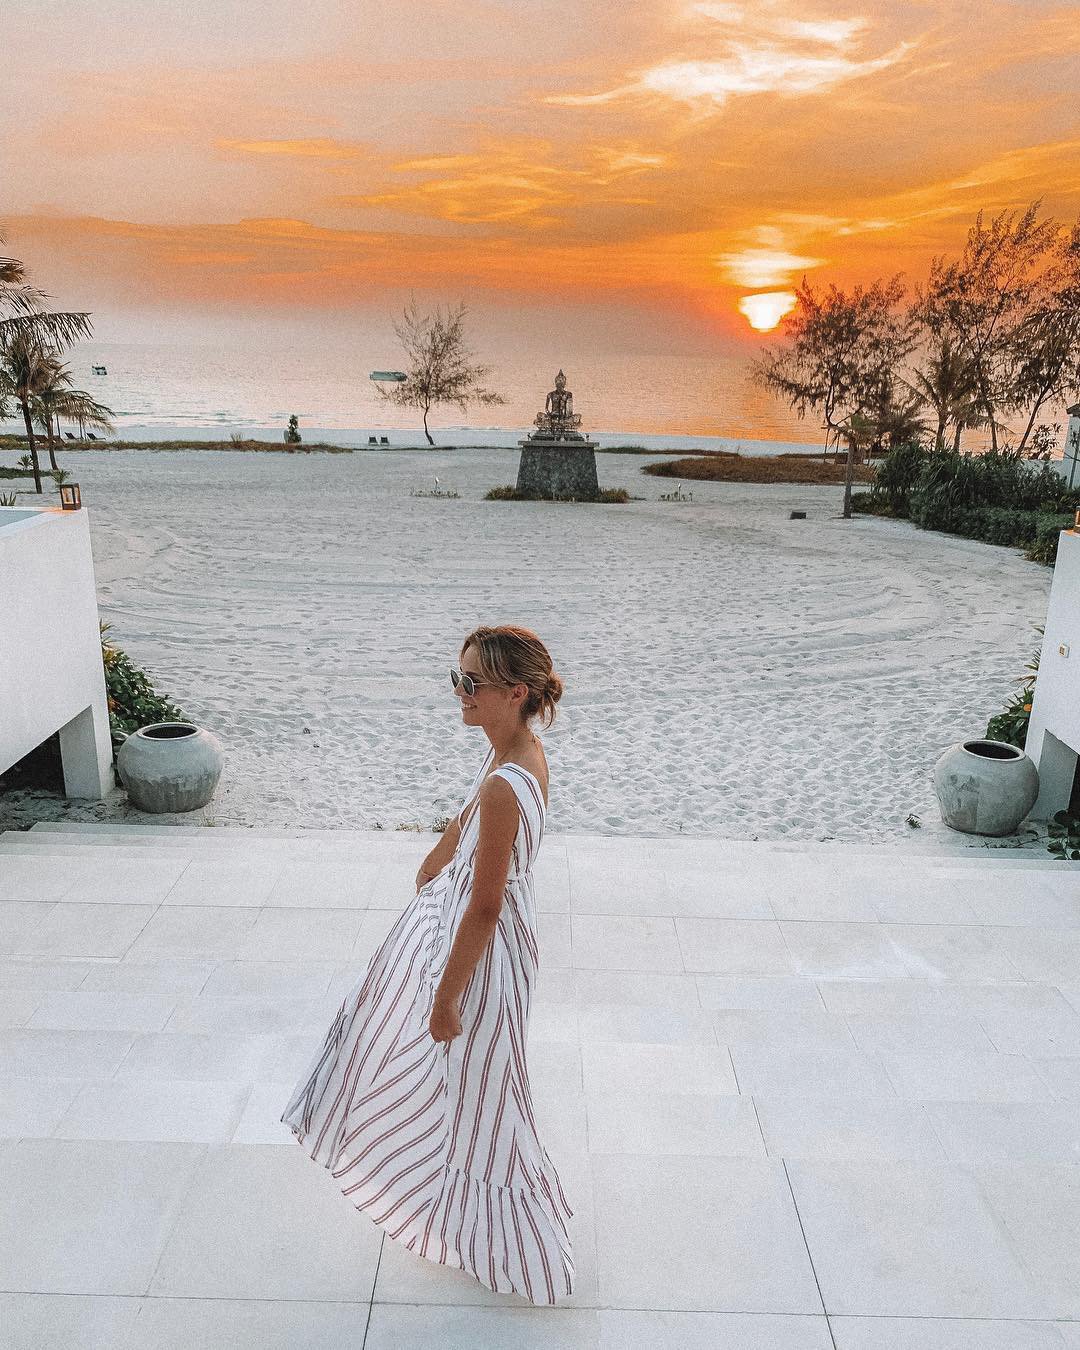 affordable honeymoon packages thailand beach view lisaifi